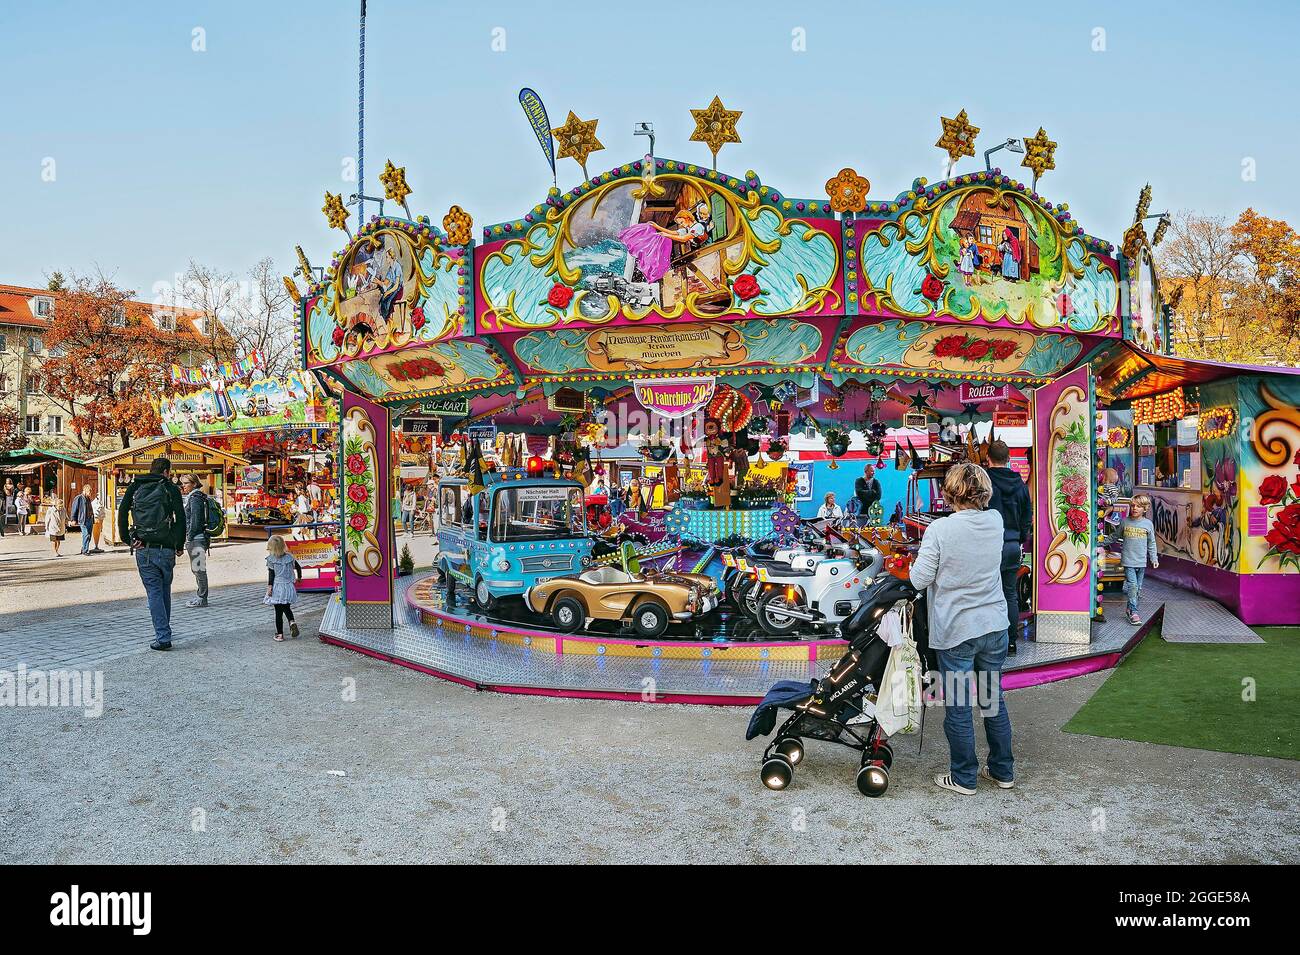 Nostalgia Children's Carousel, Auer Dult, Munich, Bavaria, Germany Stock Photo